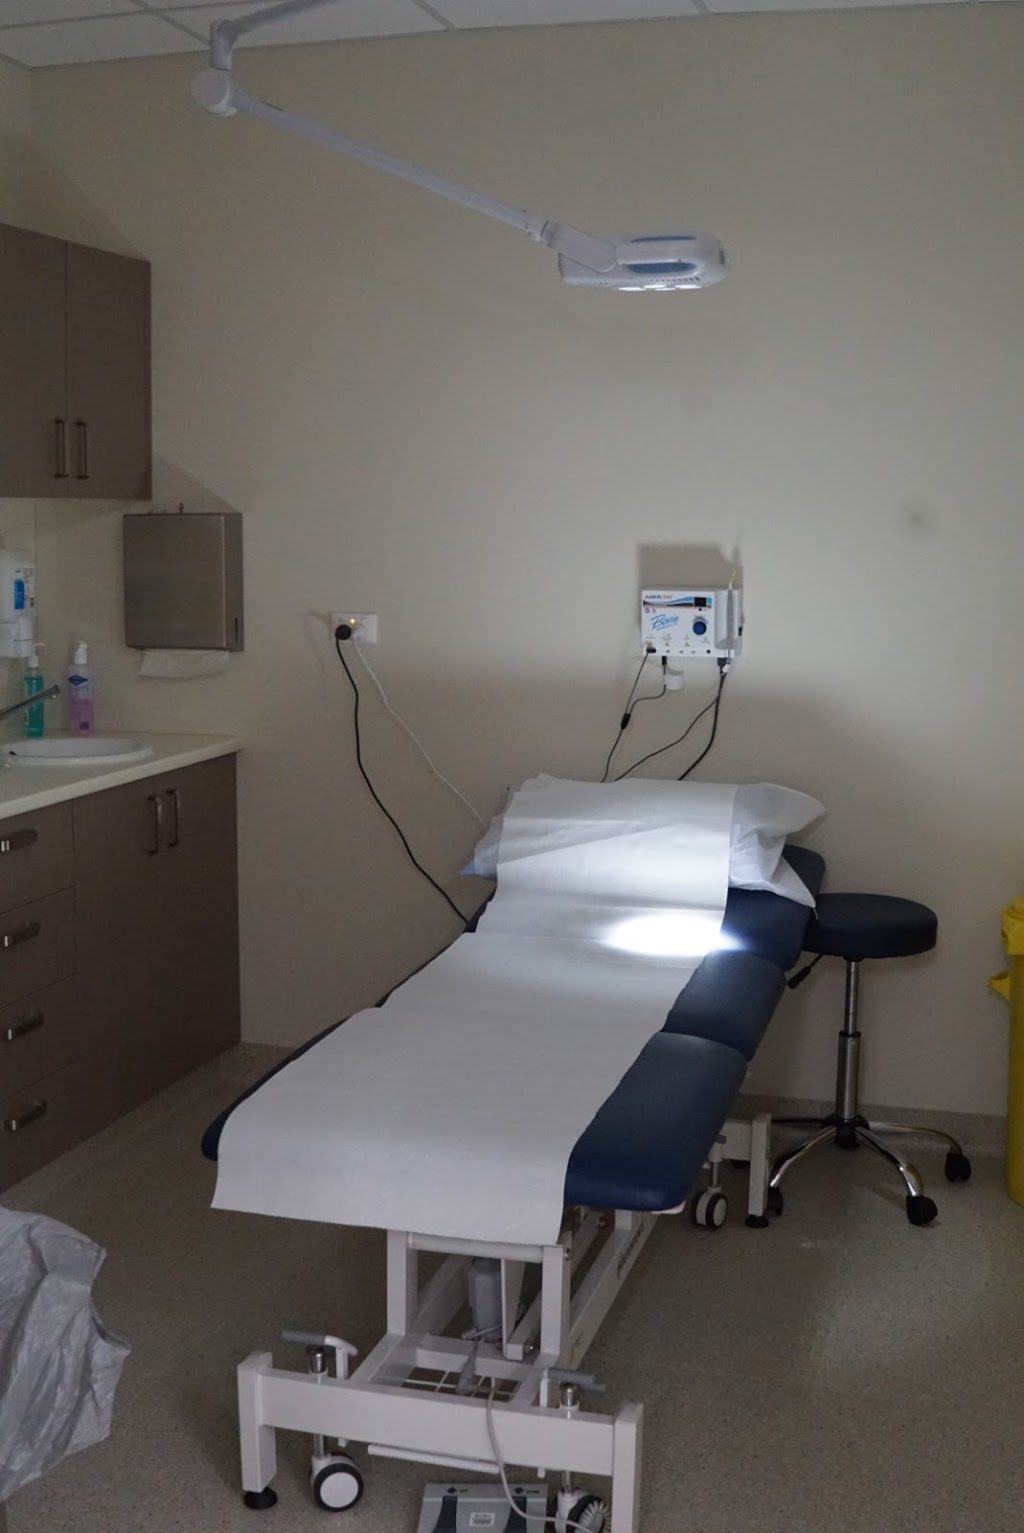 Erina Skin Cancer Clinic | hospital | 155 The Entrance Rd, Erina NSW 2250, Australia | 0243652818 OR +61 2 4365 2818